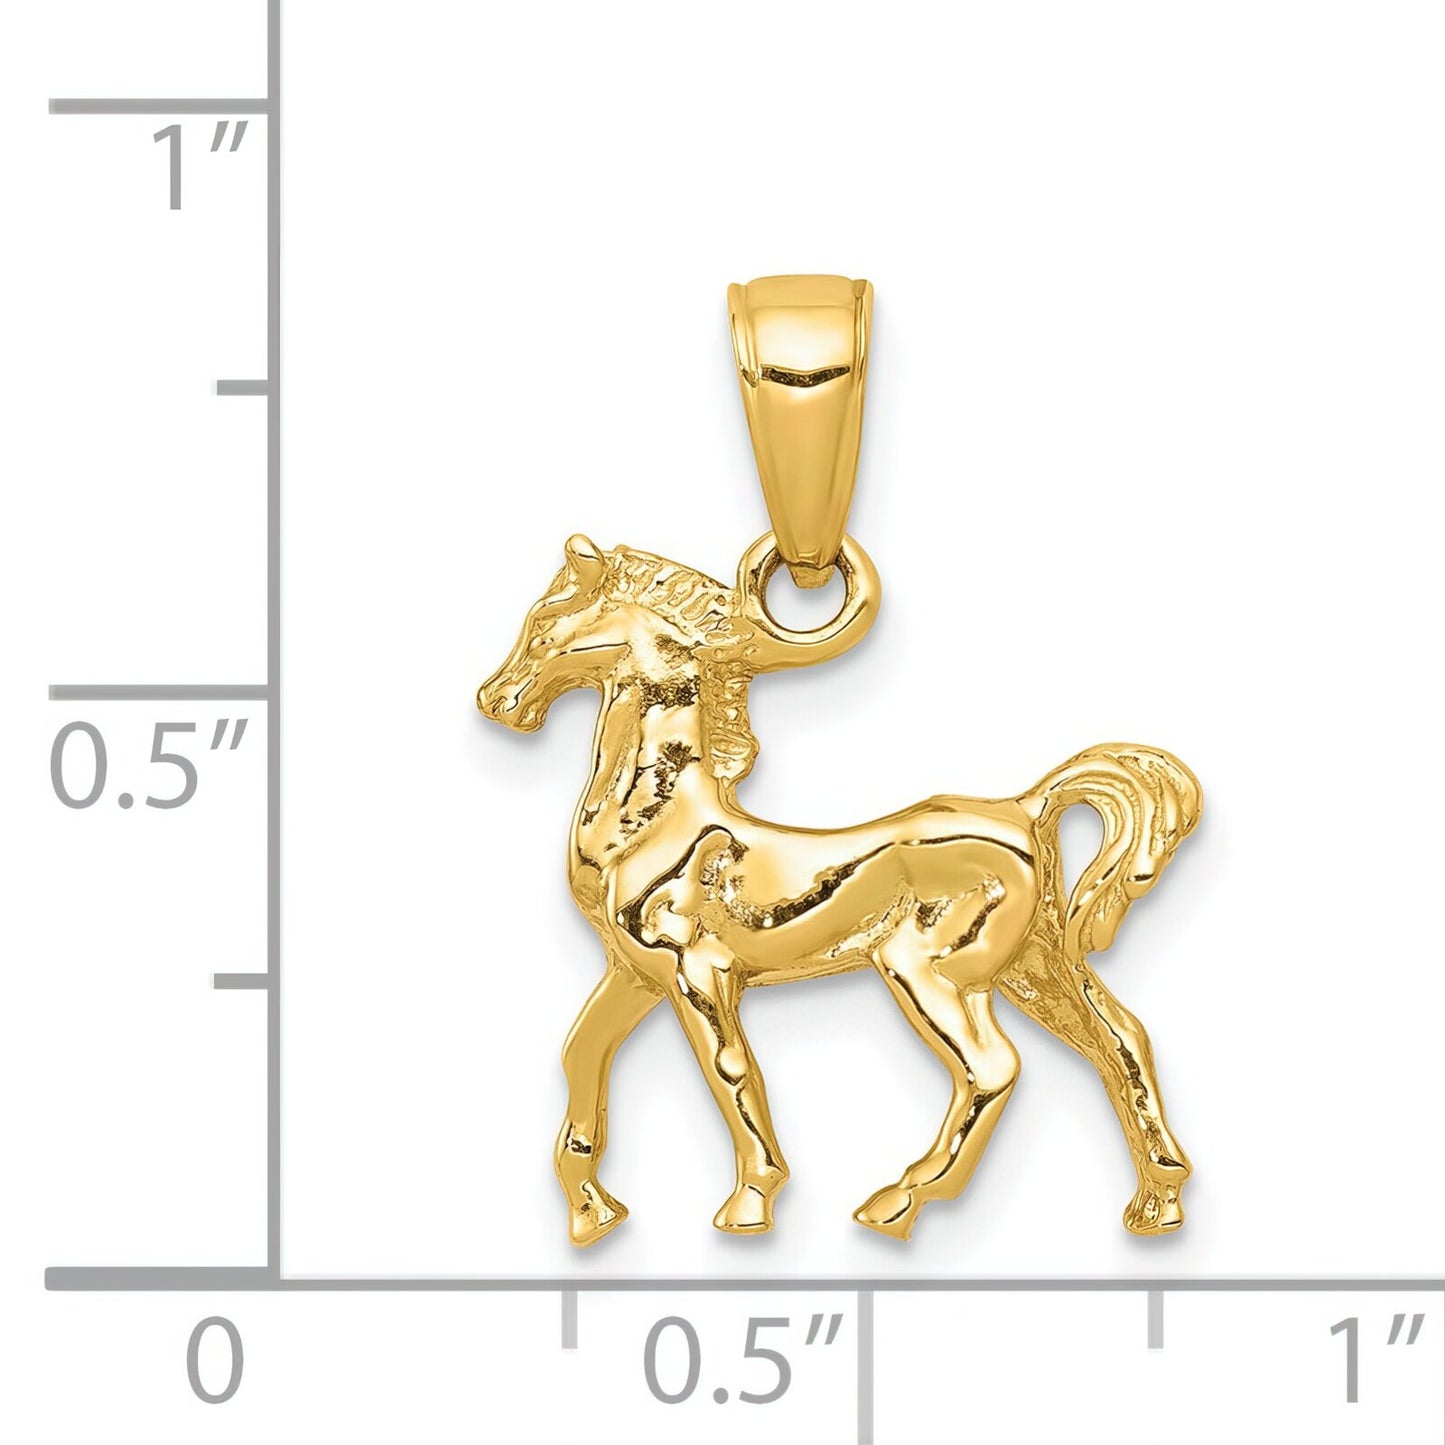 14K Gold 3D Horse Charm